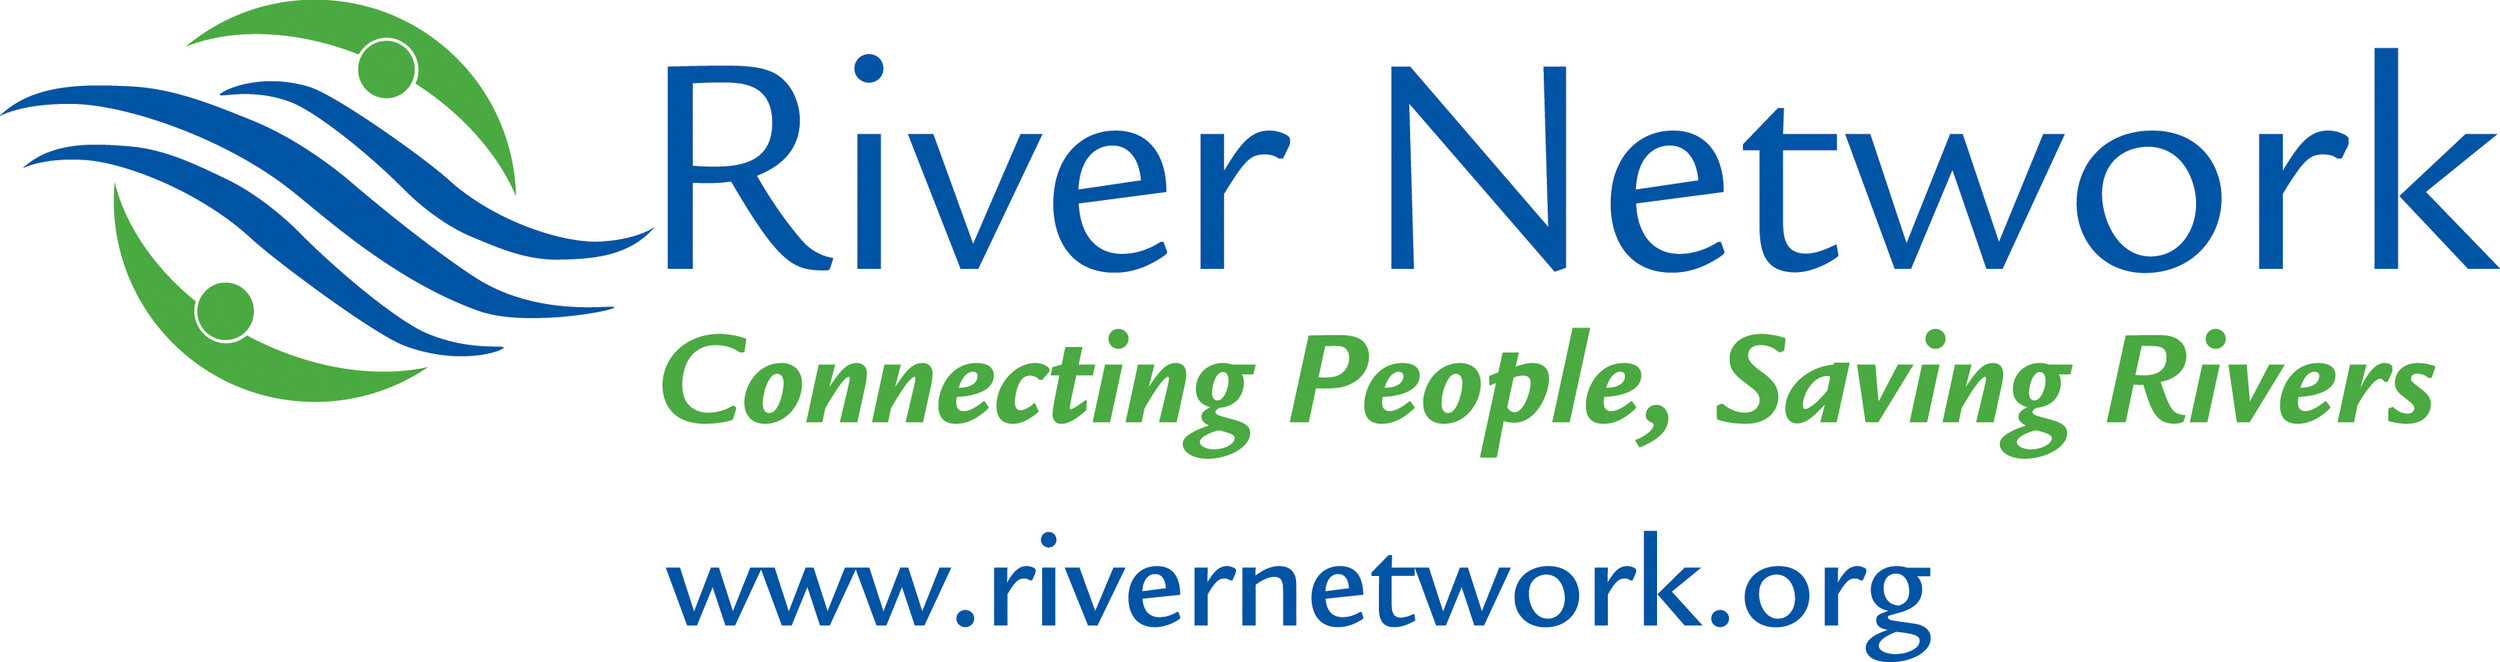 River Network Logo 2020.jpg